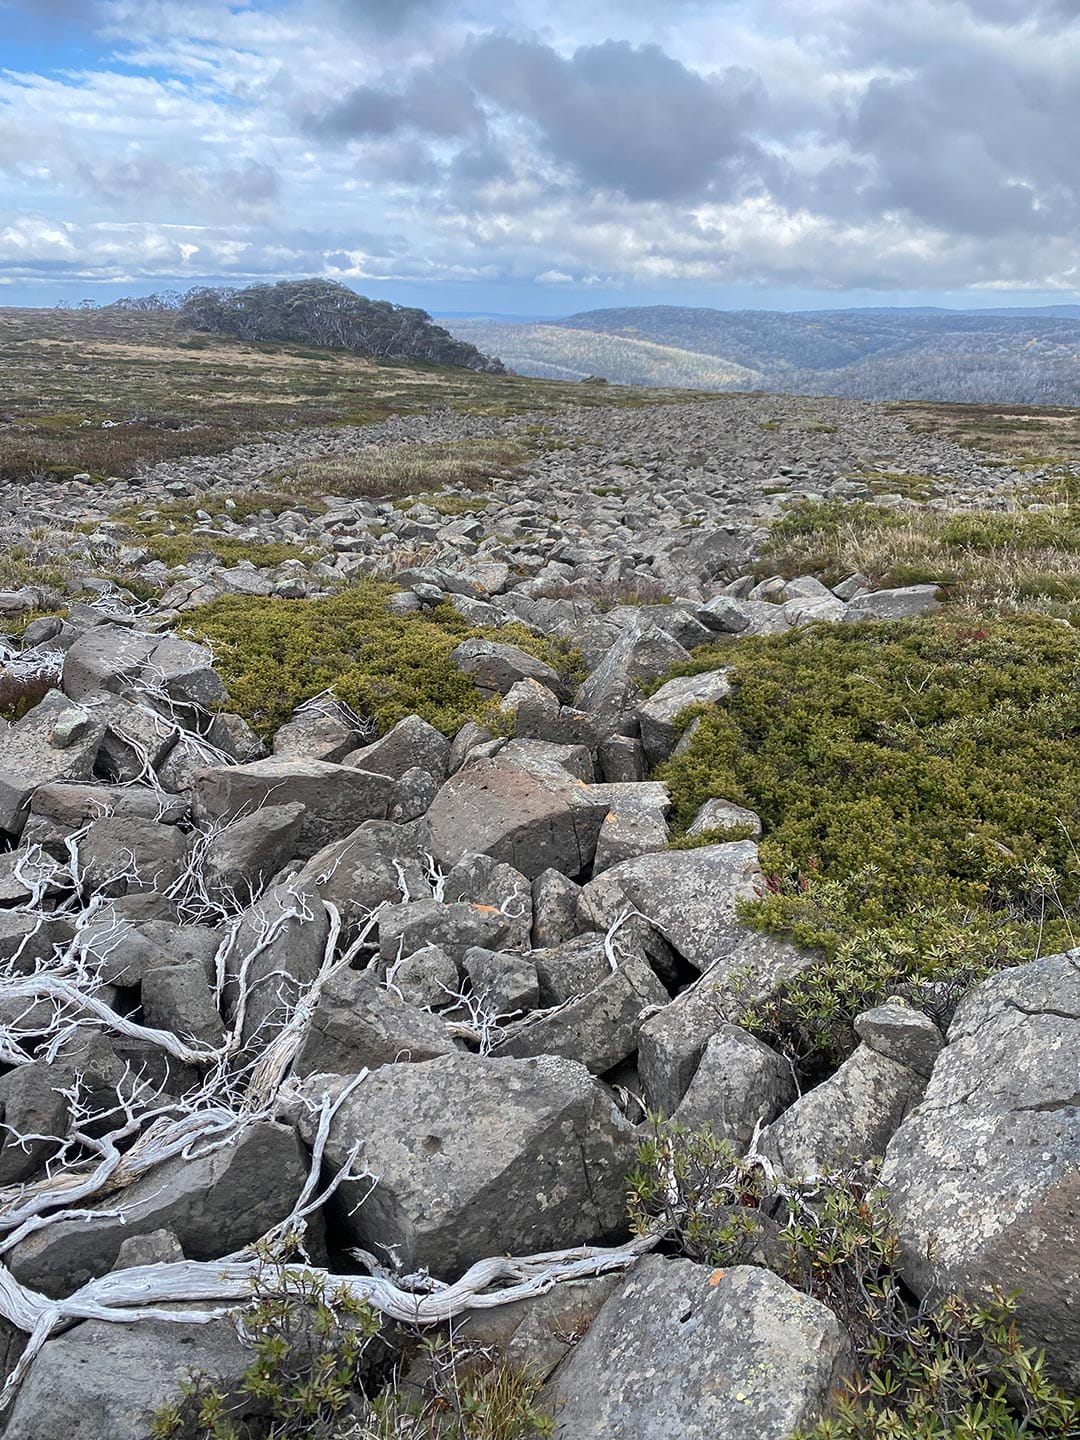 Rocks and vegetation at Mt Bundara